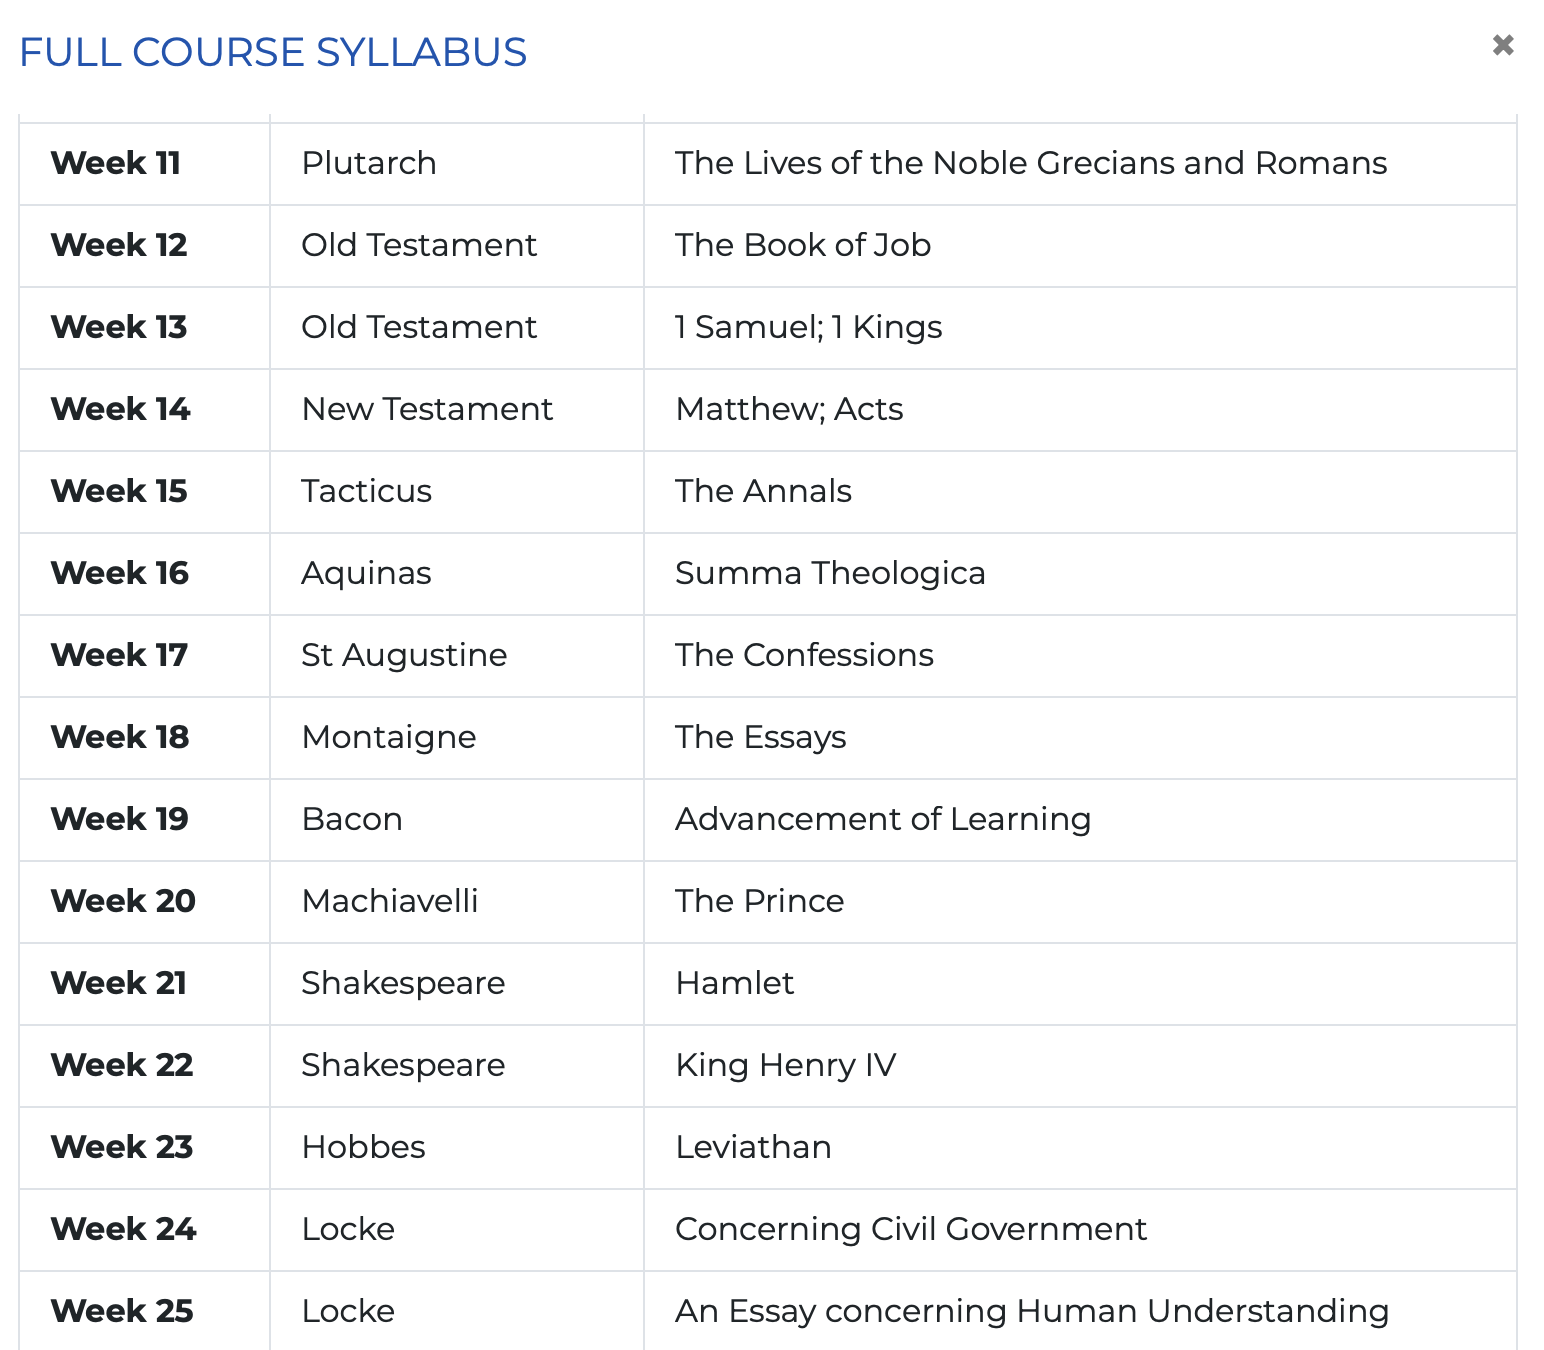 Full course syllabus